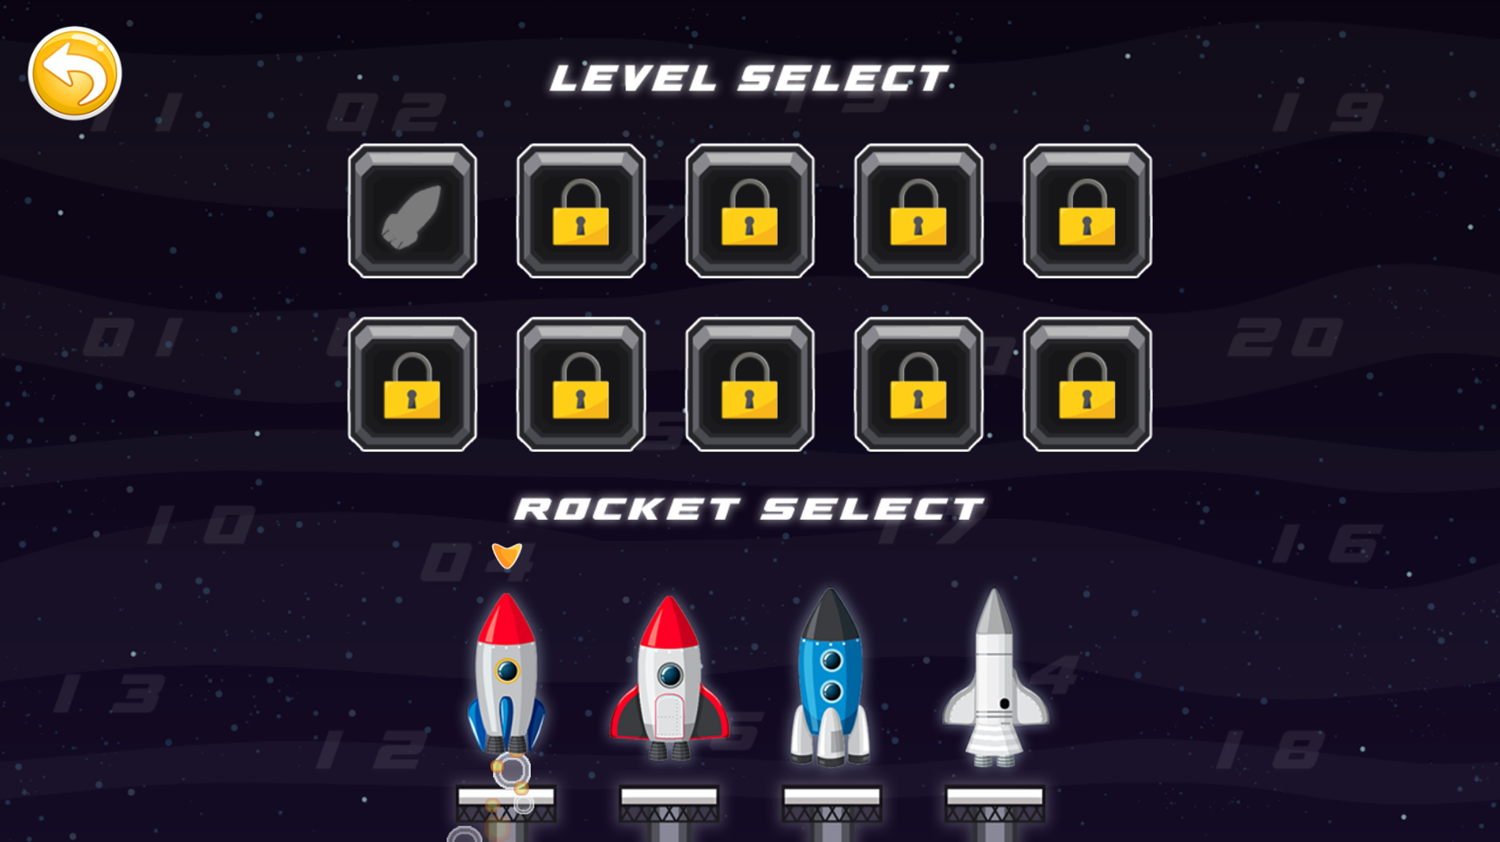 Rocket Balance Even Odd Game Level Select Screenshot.